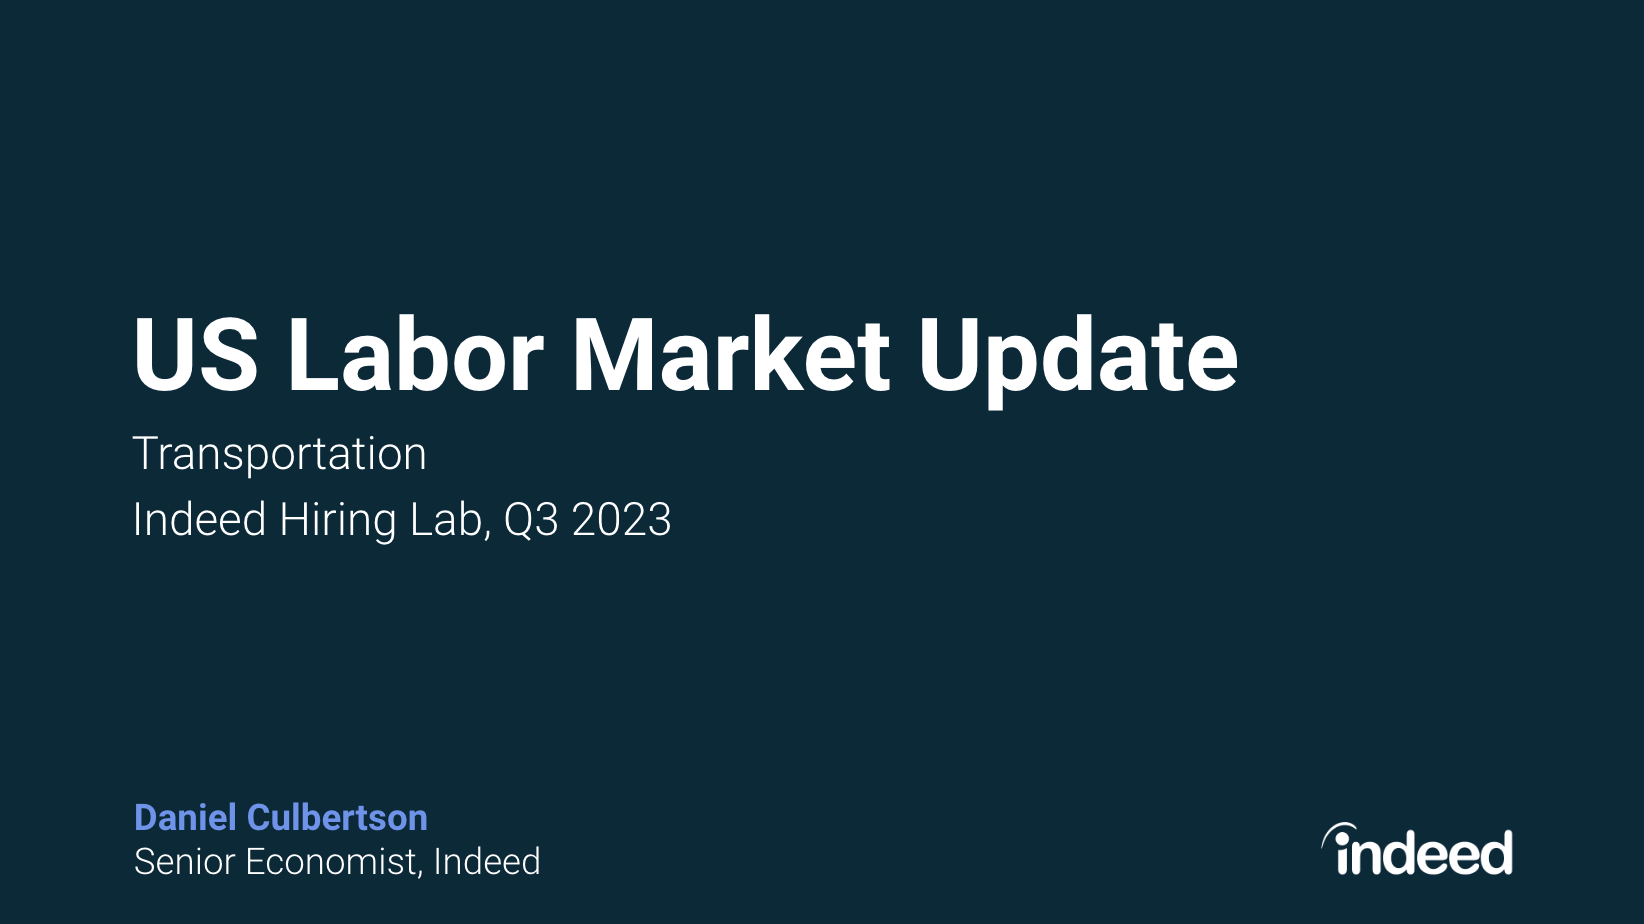 US Labor Market Update Transportation Q3 2023